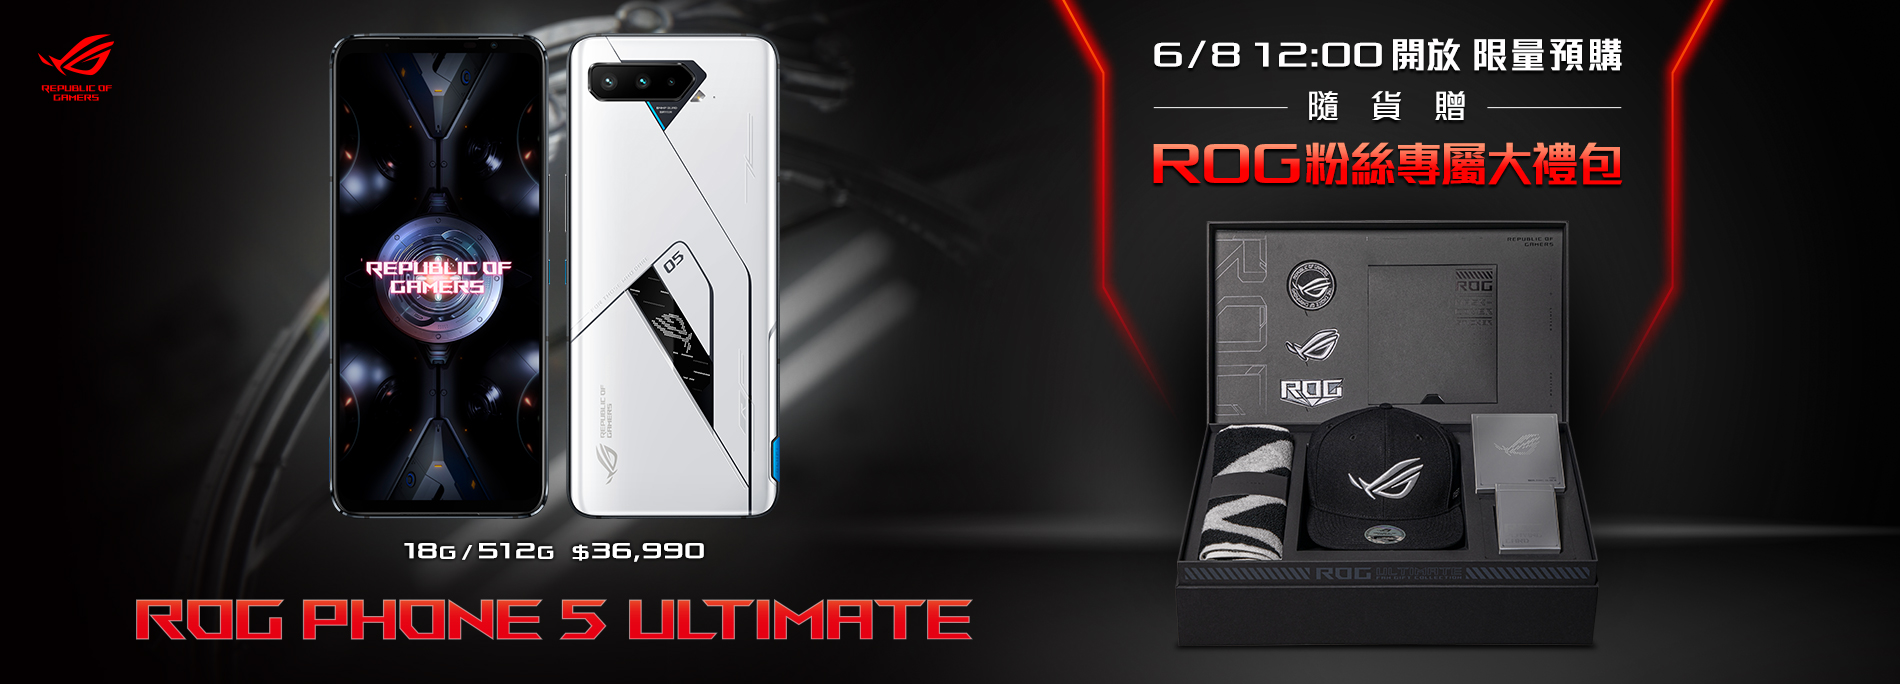 ROG Phone 5 Ultimate 限時限量預購!